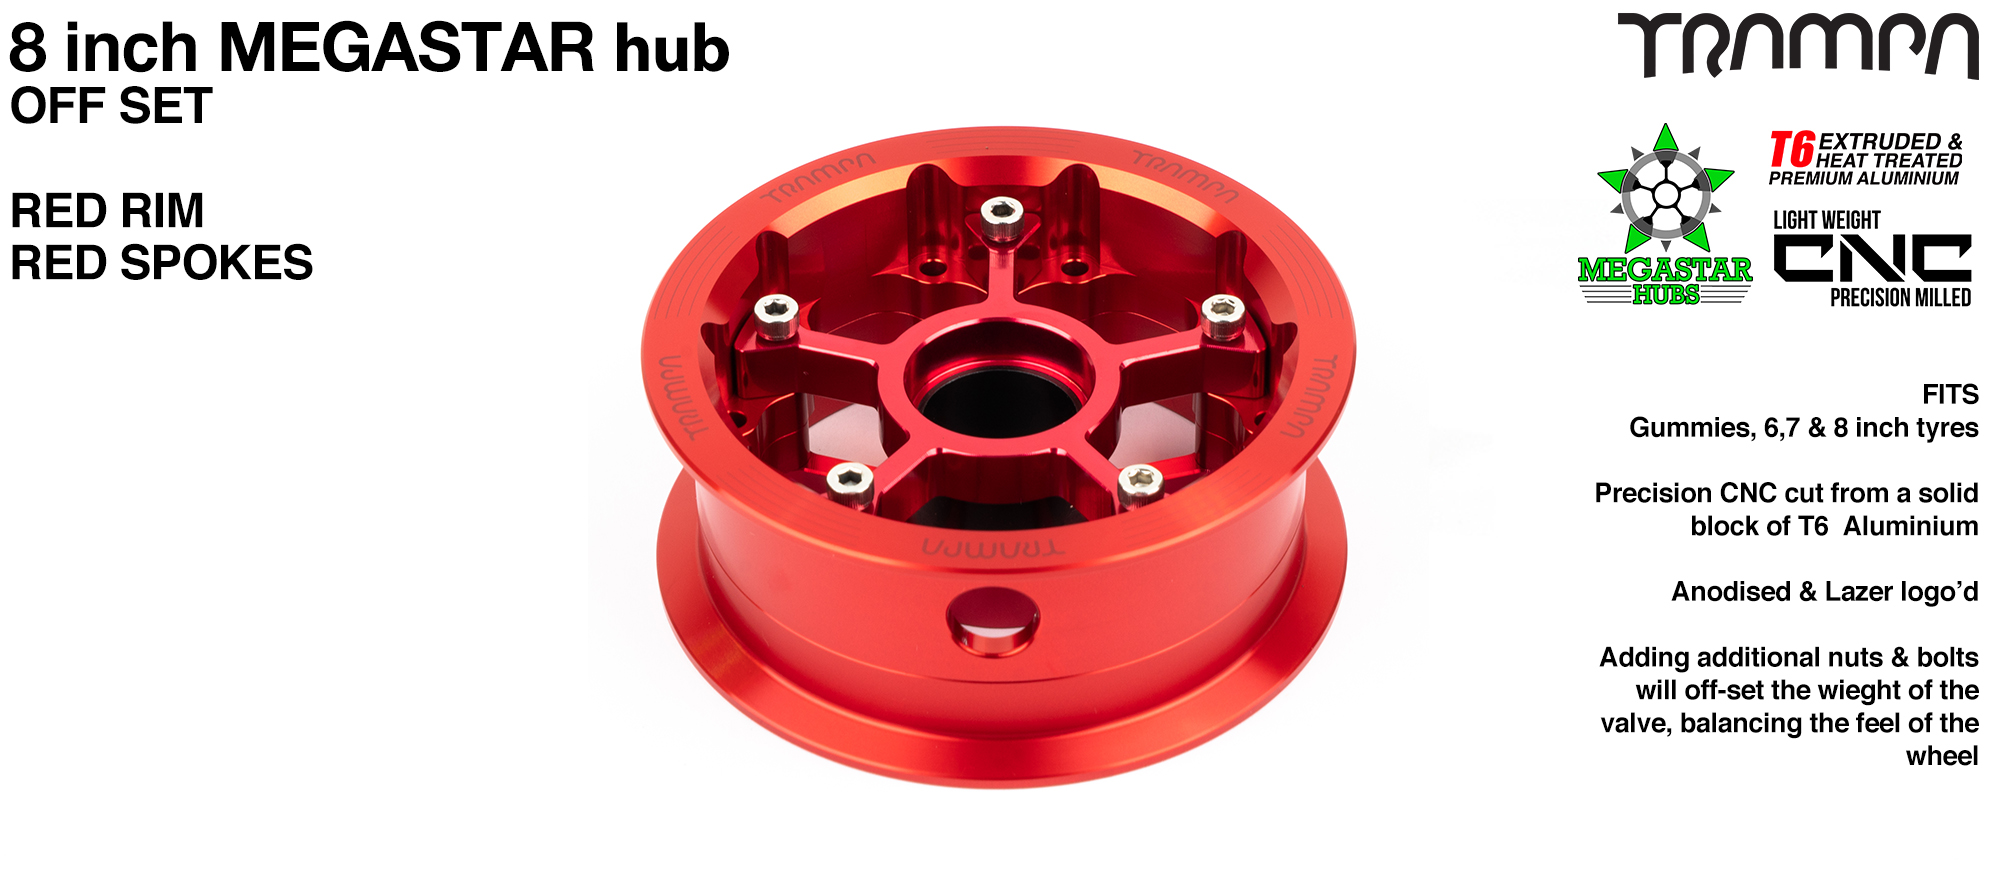 8 Inch OFF-SET MEGASTAR Hub - RED Rim with RED Spokes